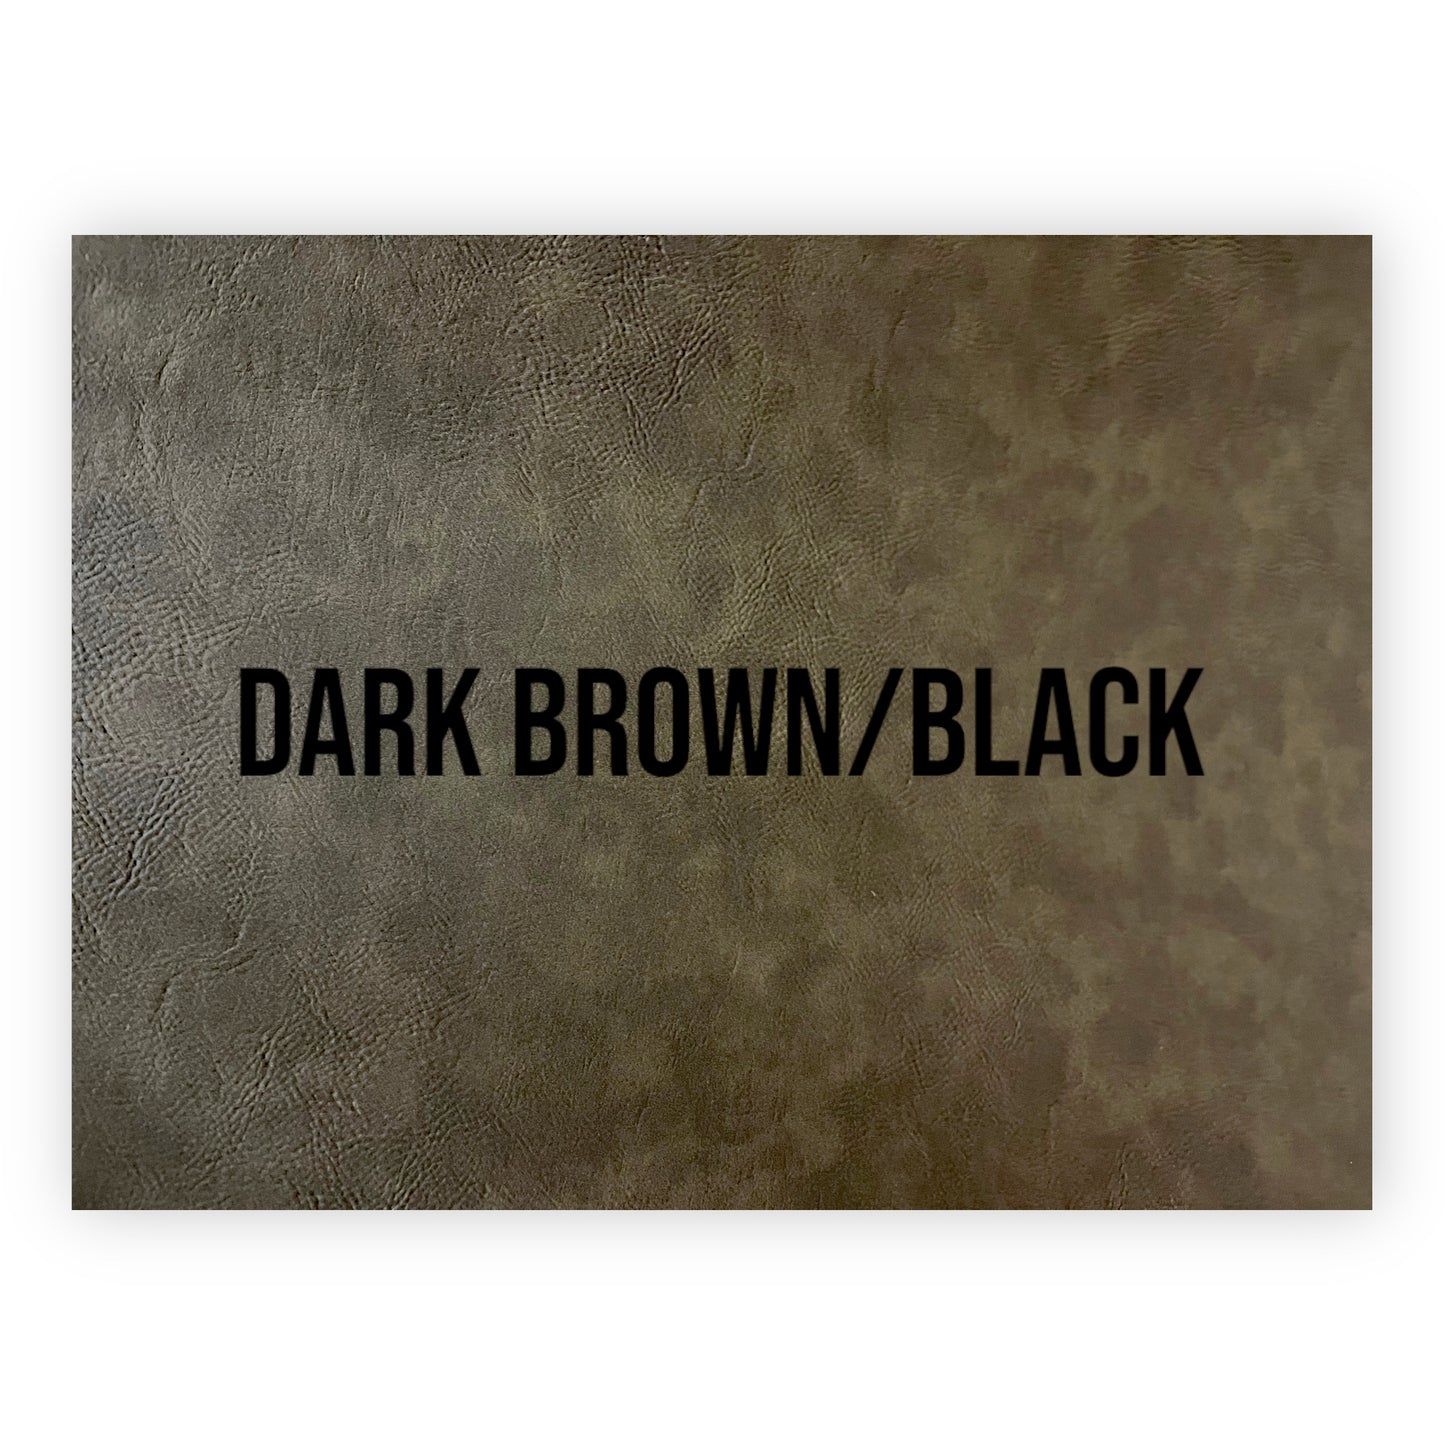 DARK BROWN/BLACK HYDBOND LEATHERETTE SHEET (12"x24")